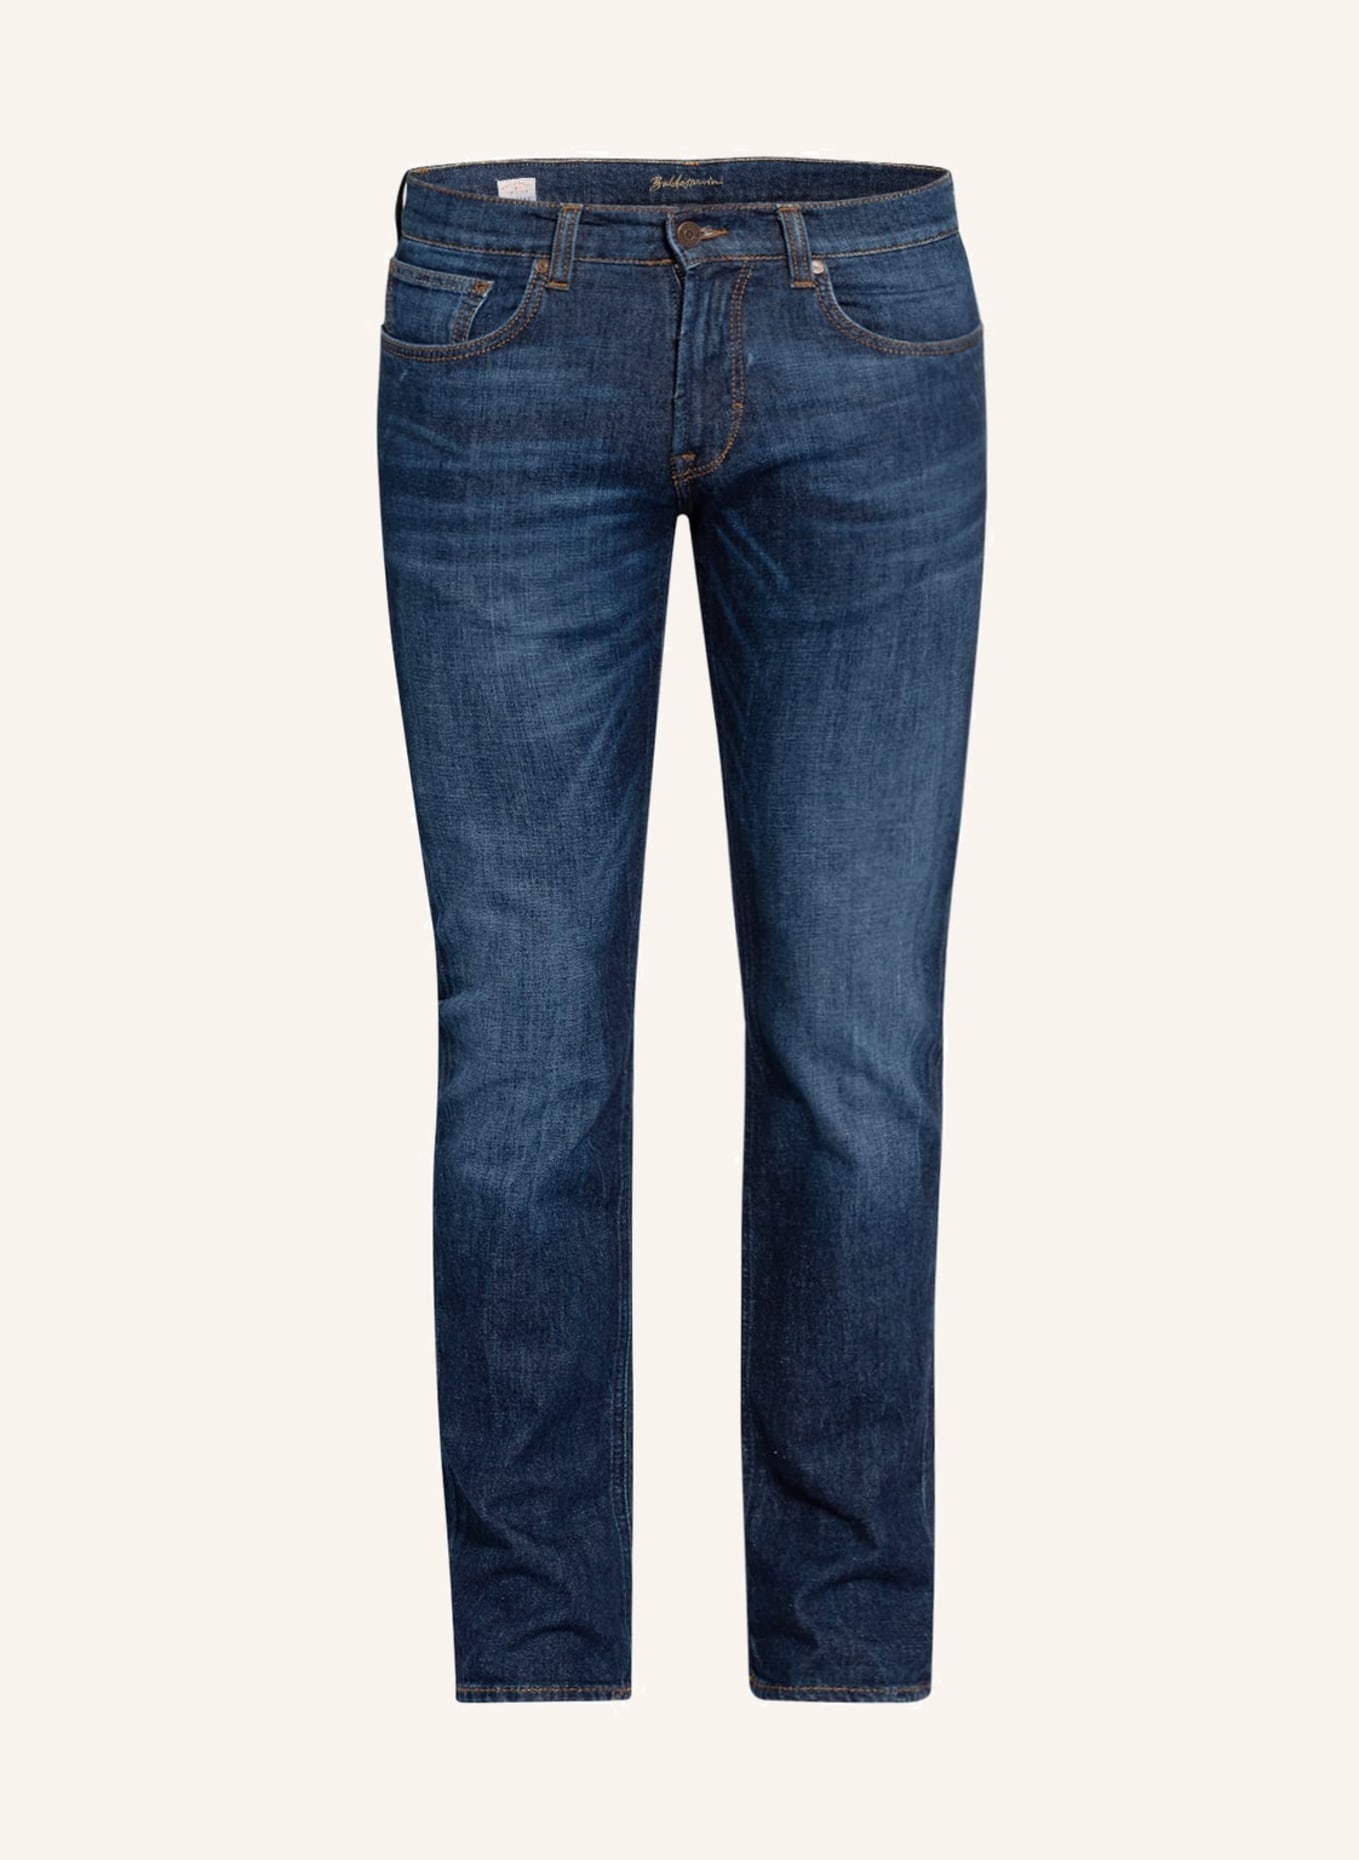 BALDESSARINI Jeans Slim Fit, Farbe: 6816 DARK BLUE (Bild 1)